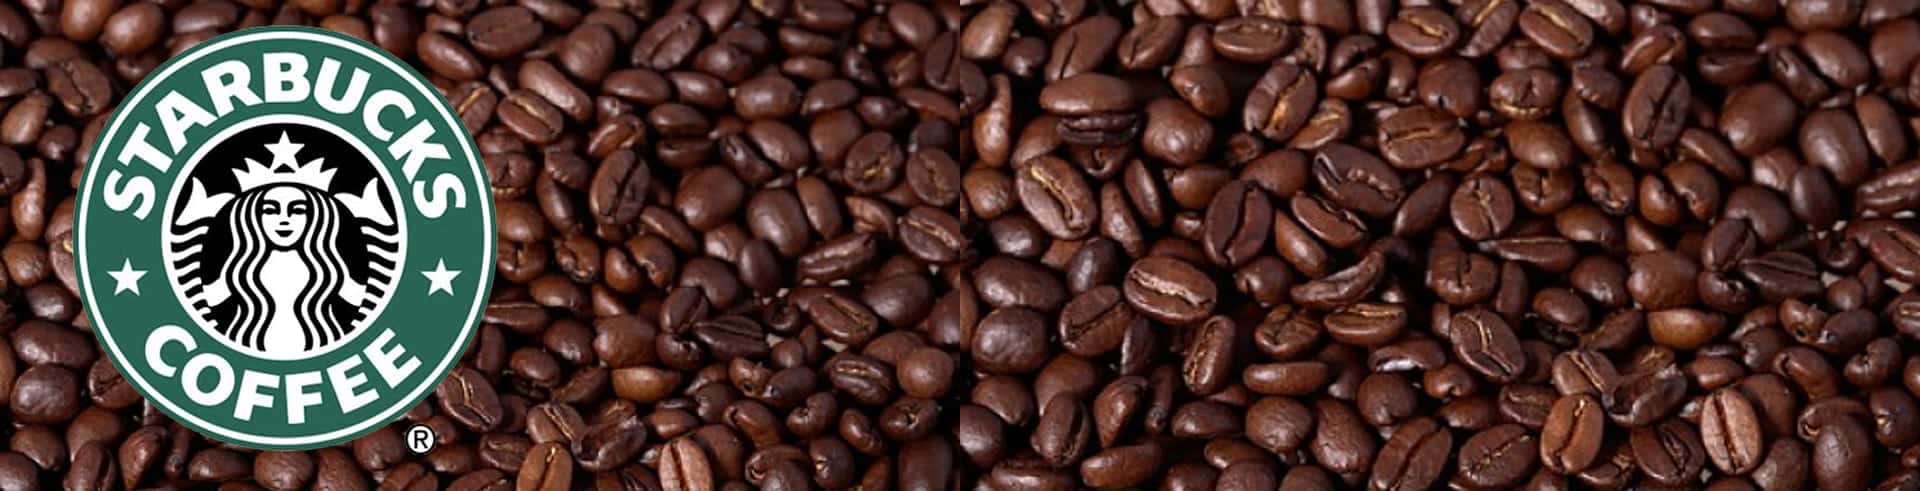 Starbucks coffee beans